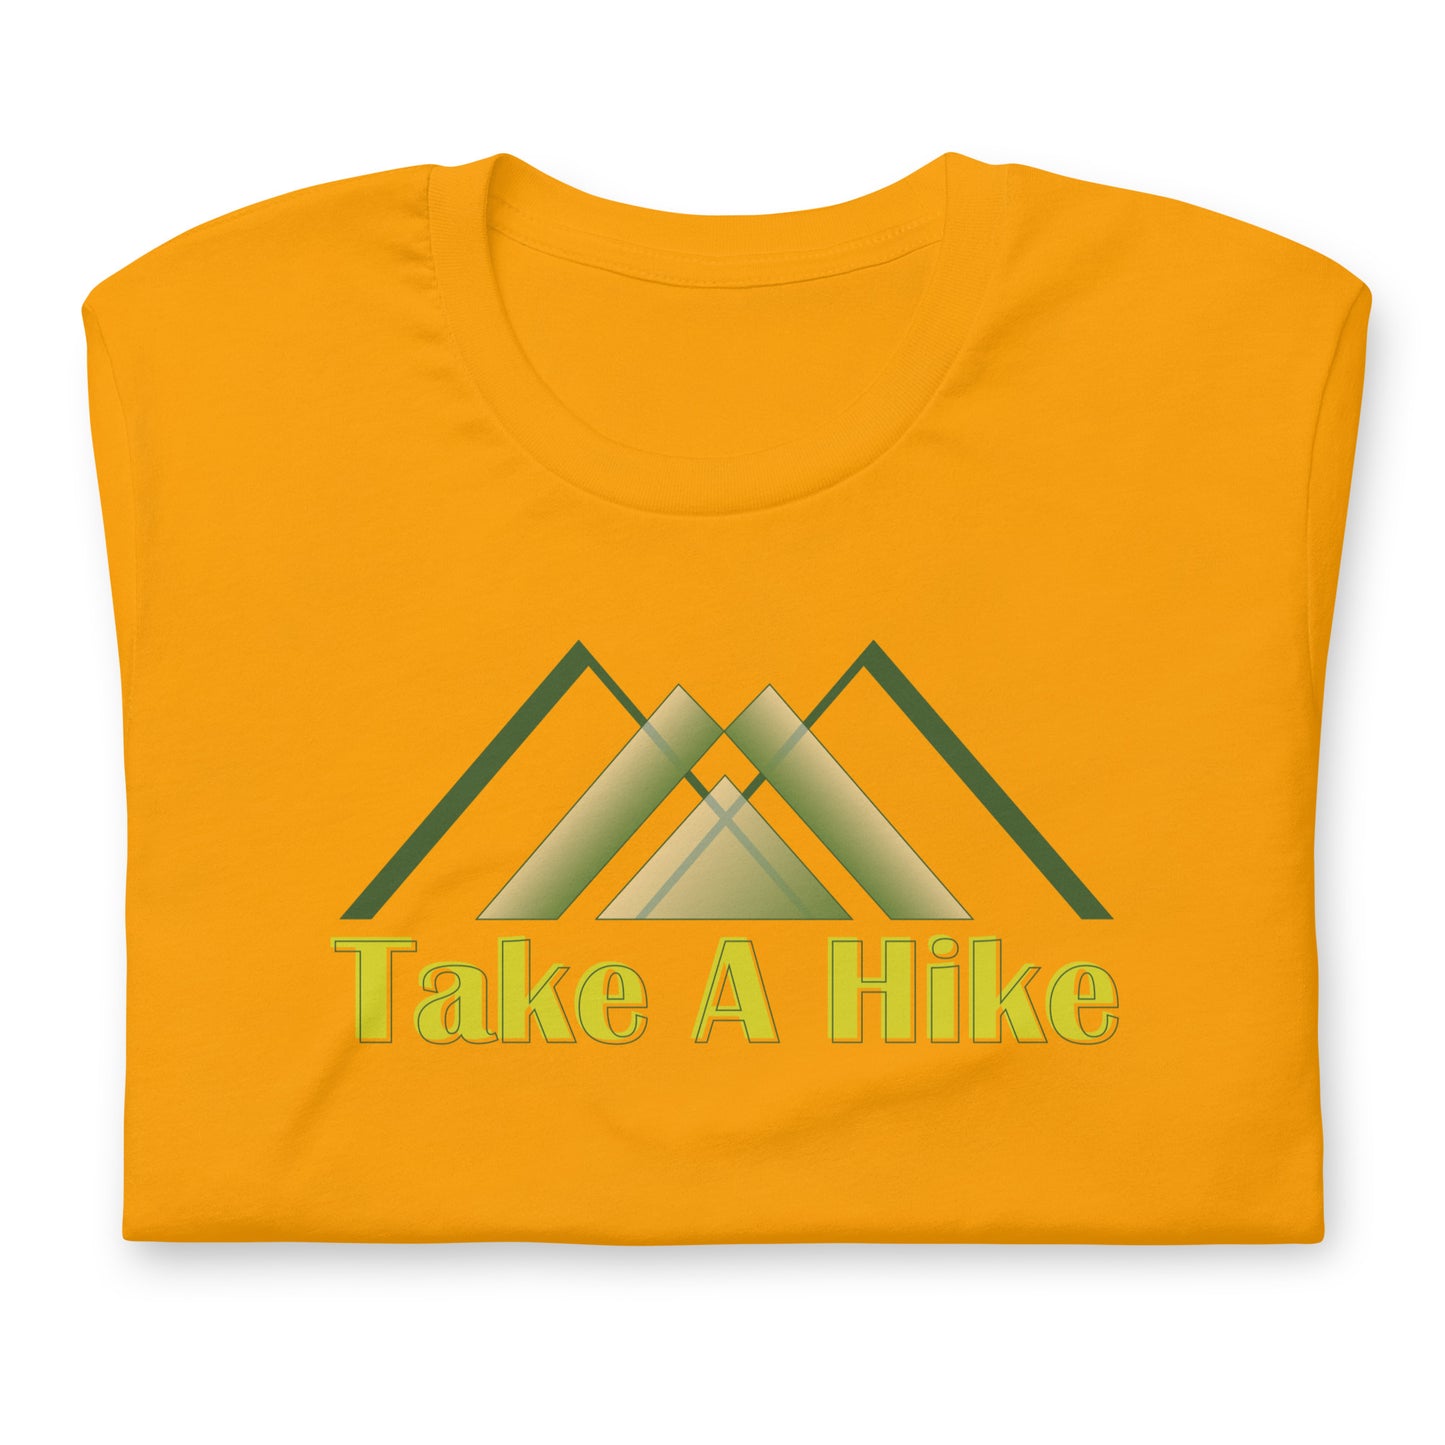 Trailblazer Tee: The Adventurer's Hike Shirt